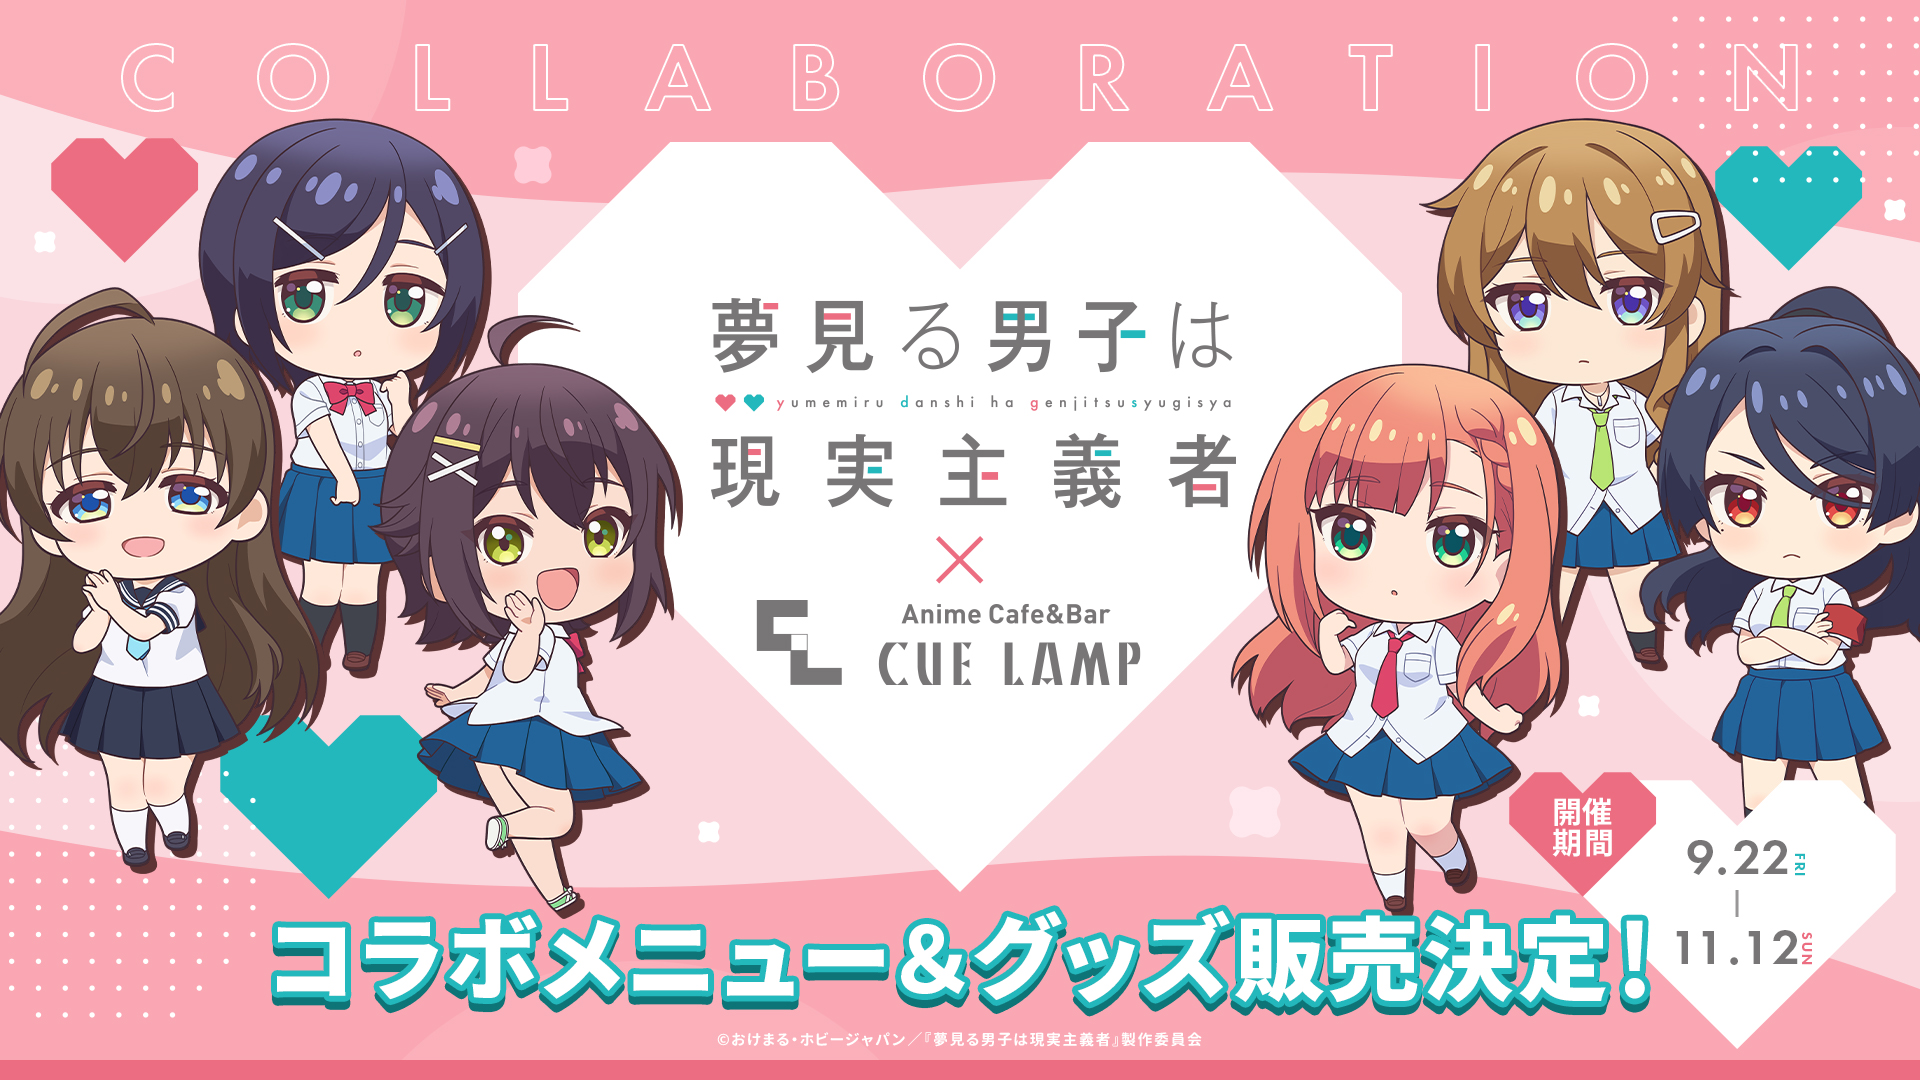 TVアニメ「夢見る男子は現実主義者」 × Anime Cafe&Bar CUE LAMPコラボ 